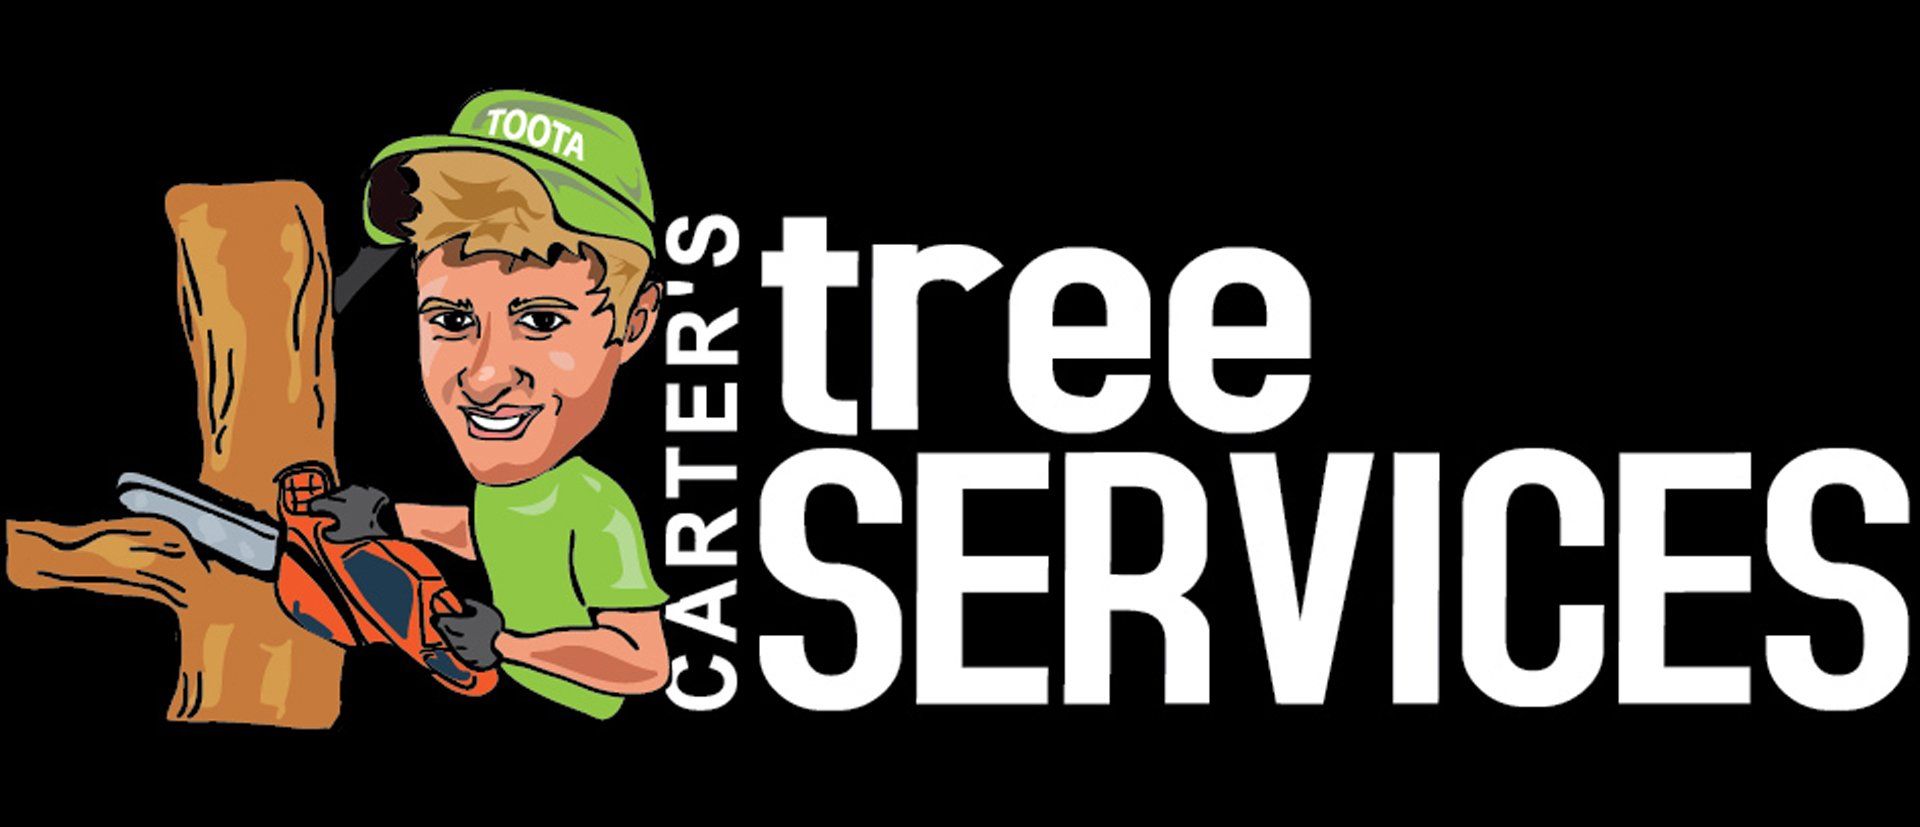 CartersTreeService-banner